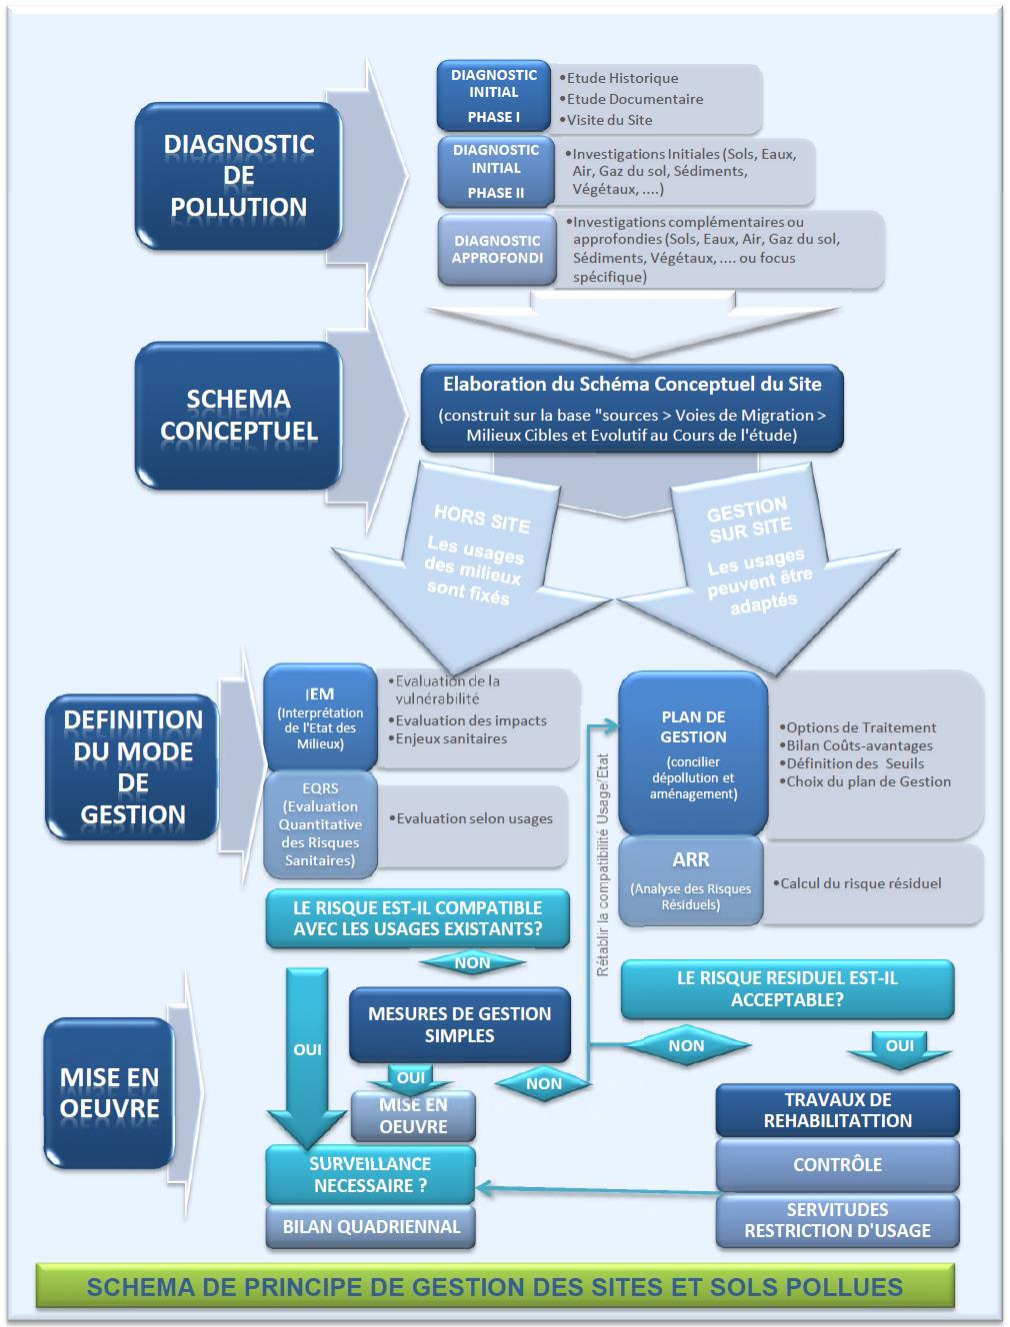 Diagnostic site et sols pollués : Schéma de principe des sites et sols pollués